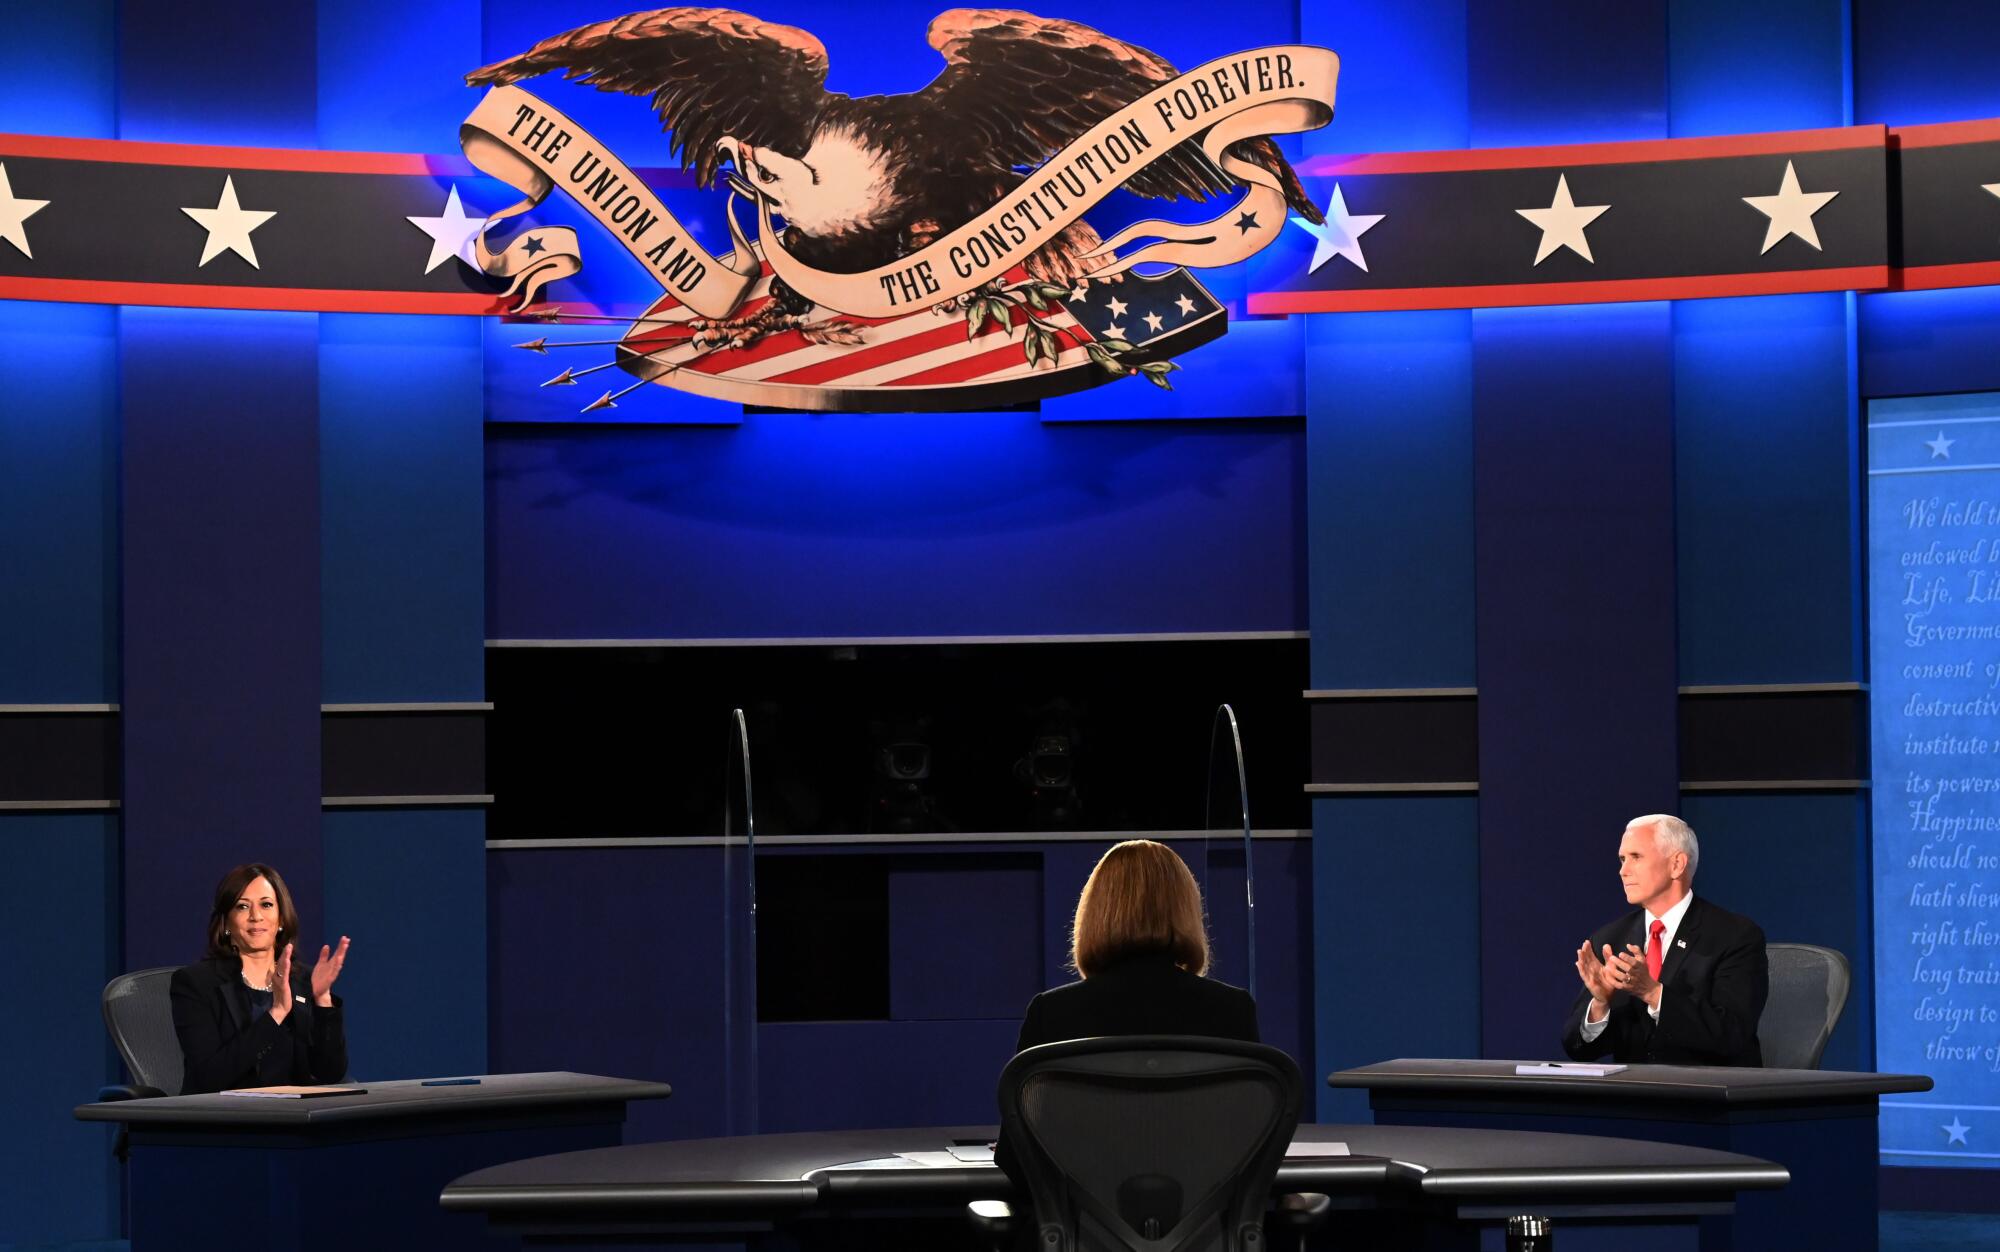 Vice presidential candidates seated behind plexiglass on debate stage